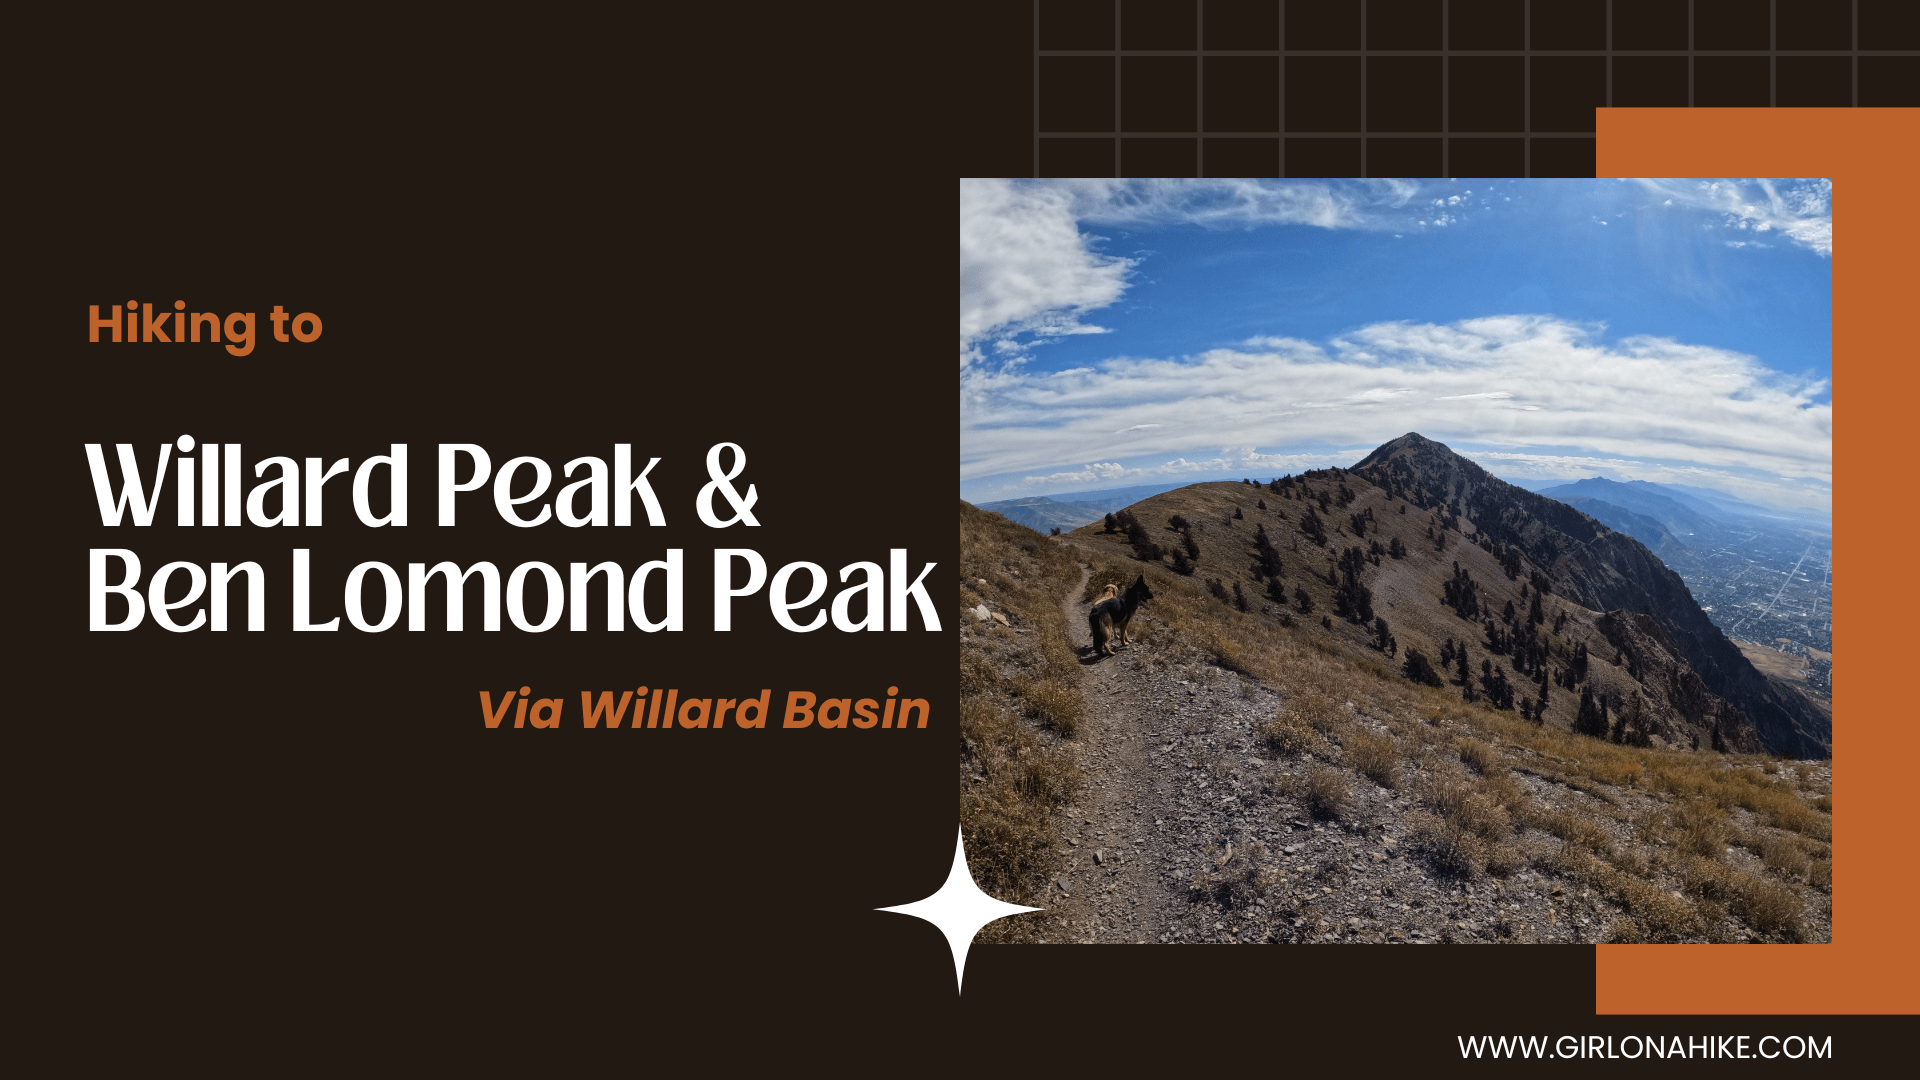 Hiking to Willard Peak & Ben Lomond Peak via Willard Basin